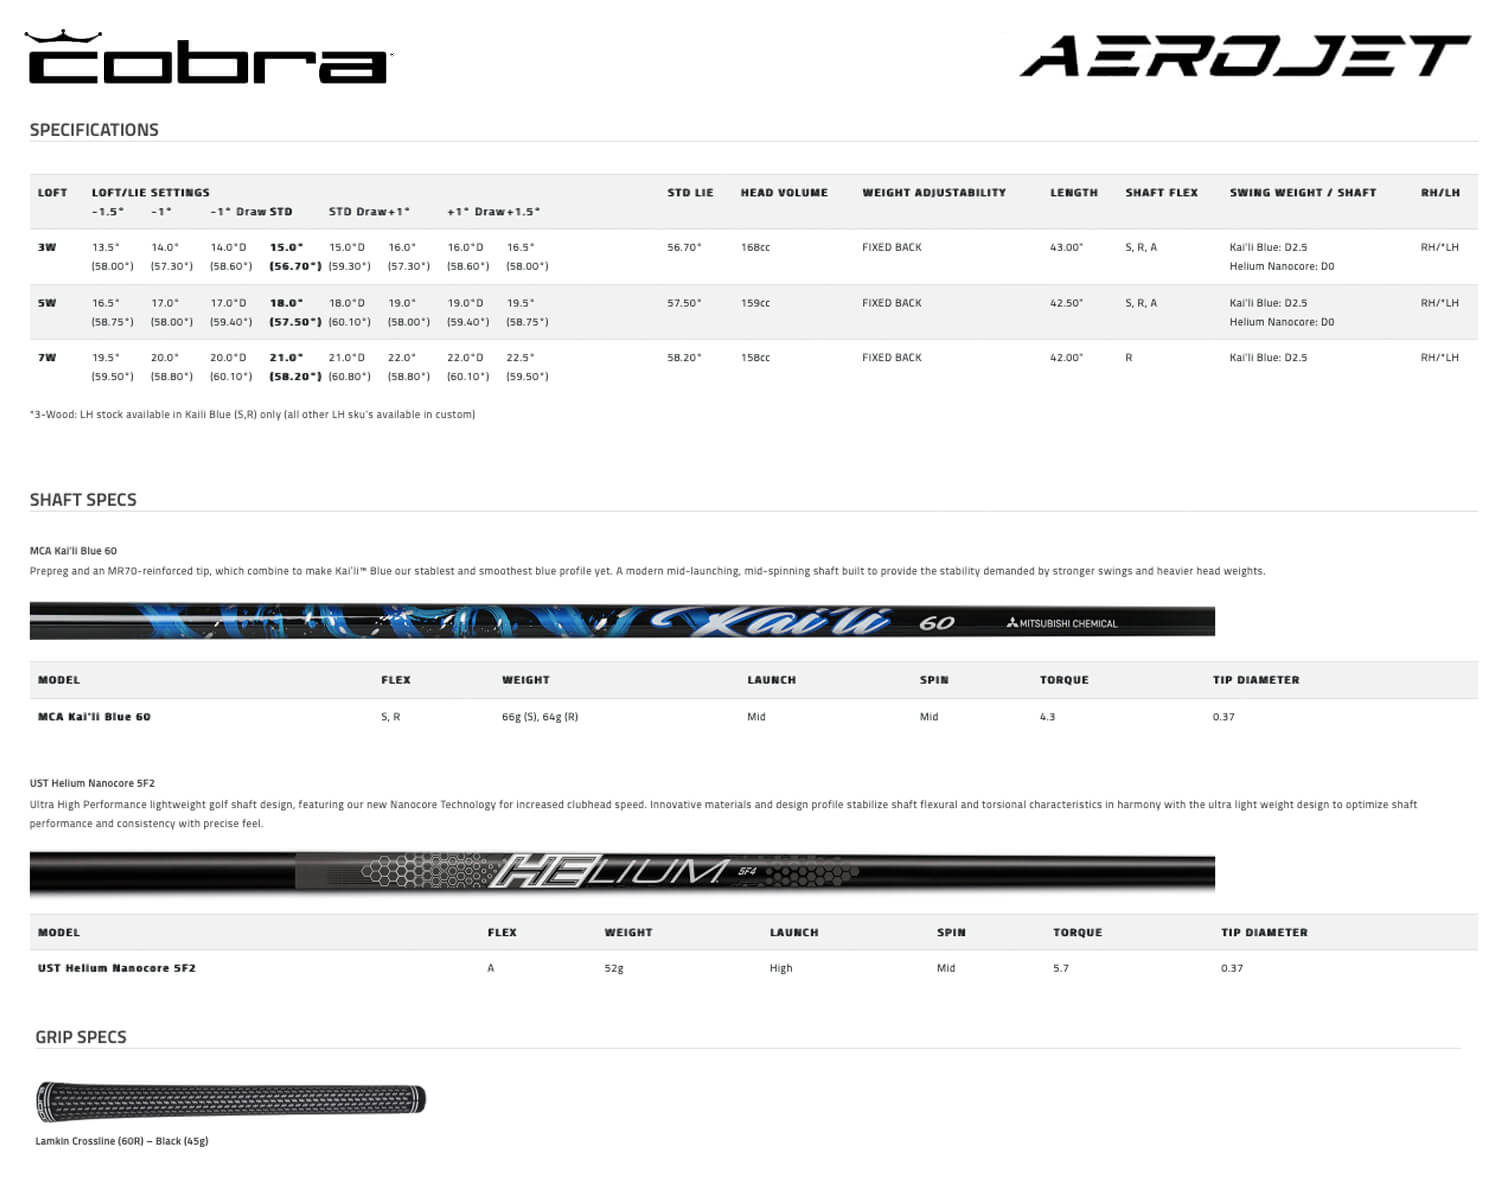 Specification for Cobra Aerojet Golf Fairway Woods